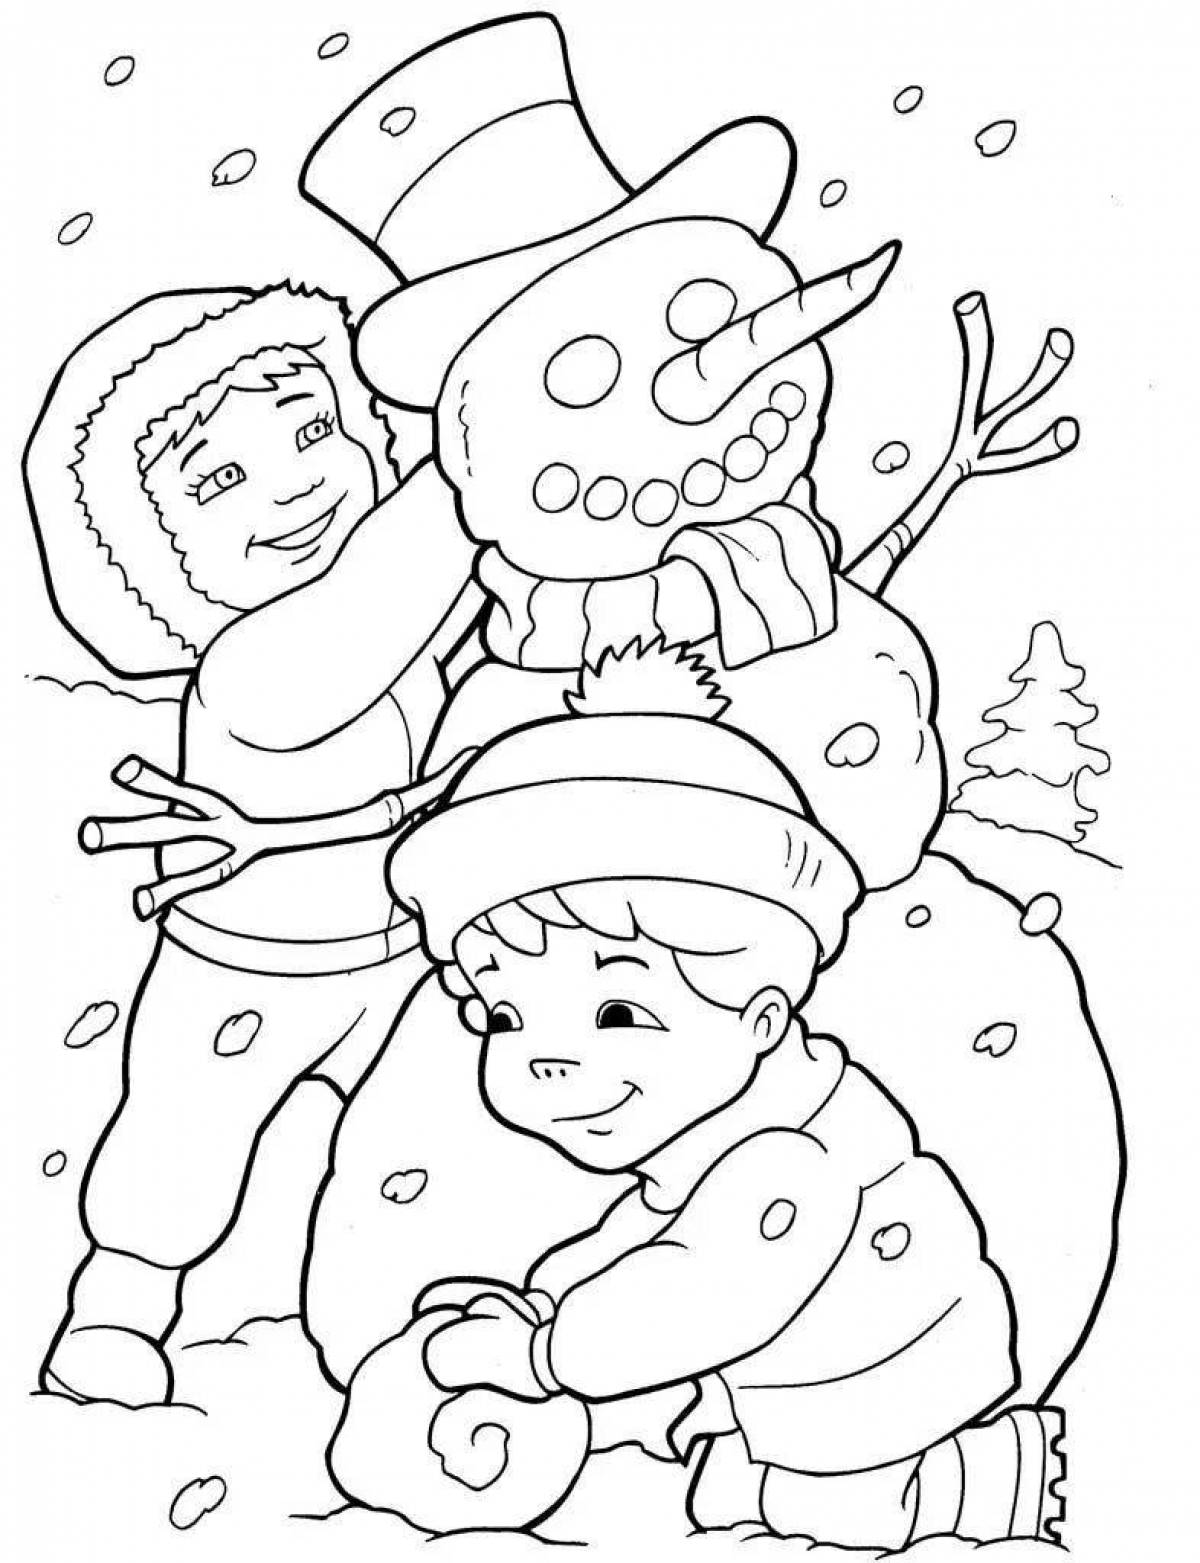 Fantastic winter coloring book for boys